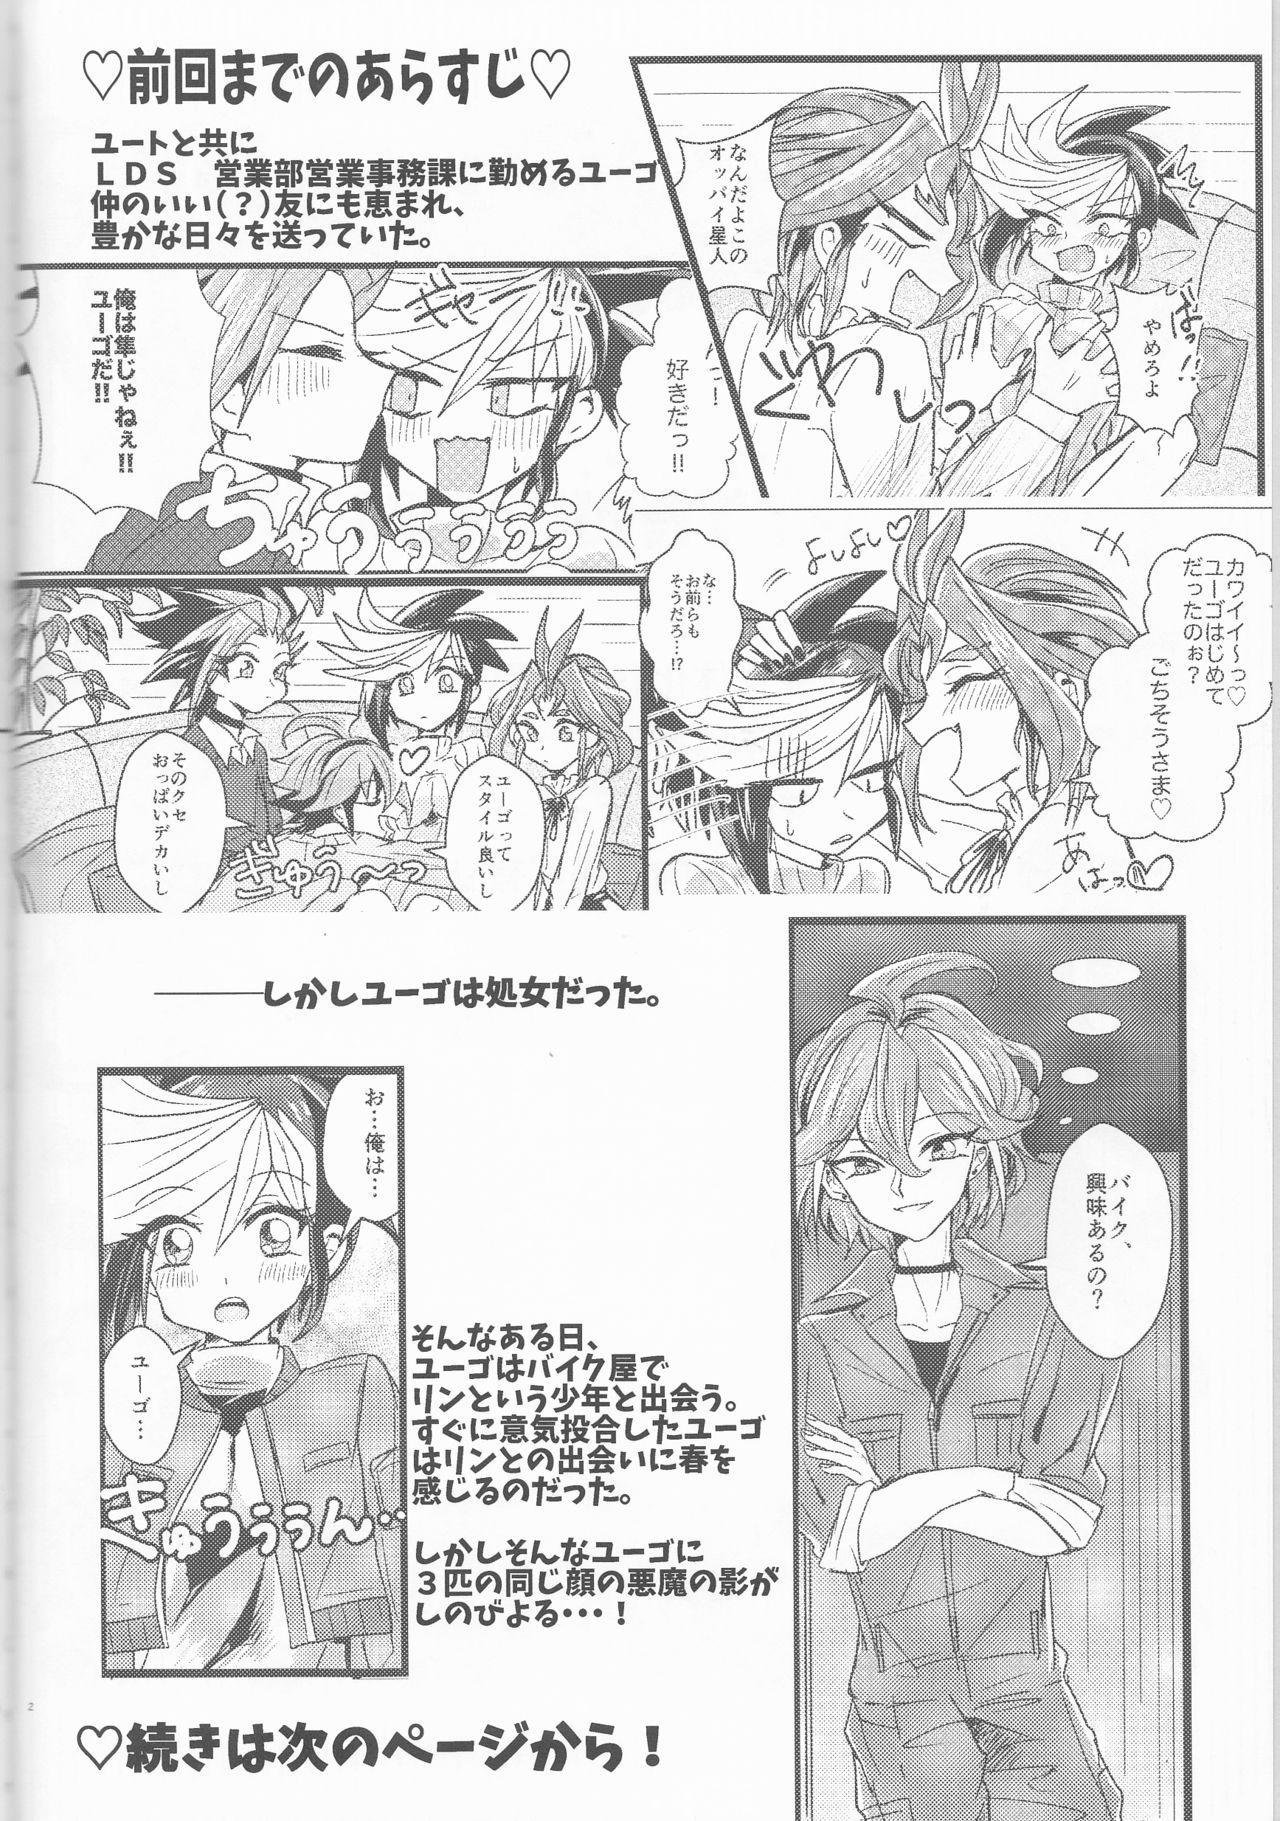 Short LDS Hishoka no Himitsu II - Yu-gi-oh arc-v Joven - Page 3